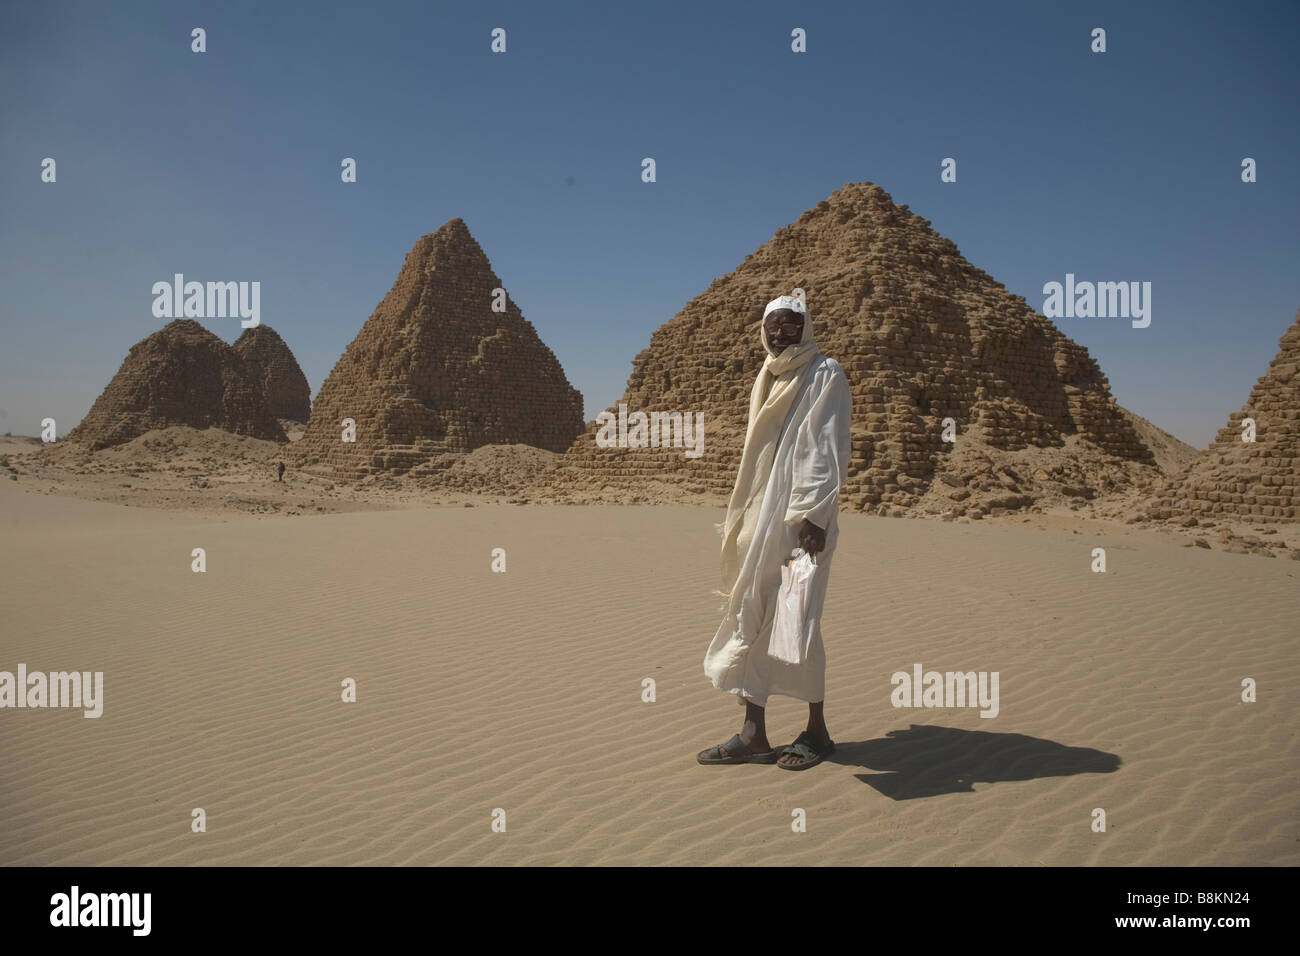 Pharaonic pyramids from old Napata kingdom in Nuri, Sudan Stock Photo